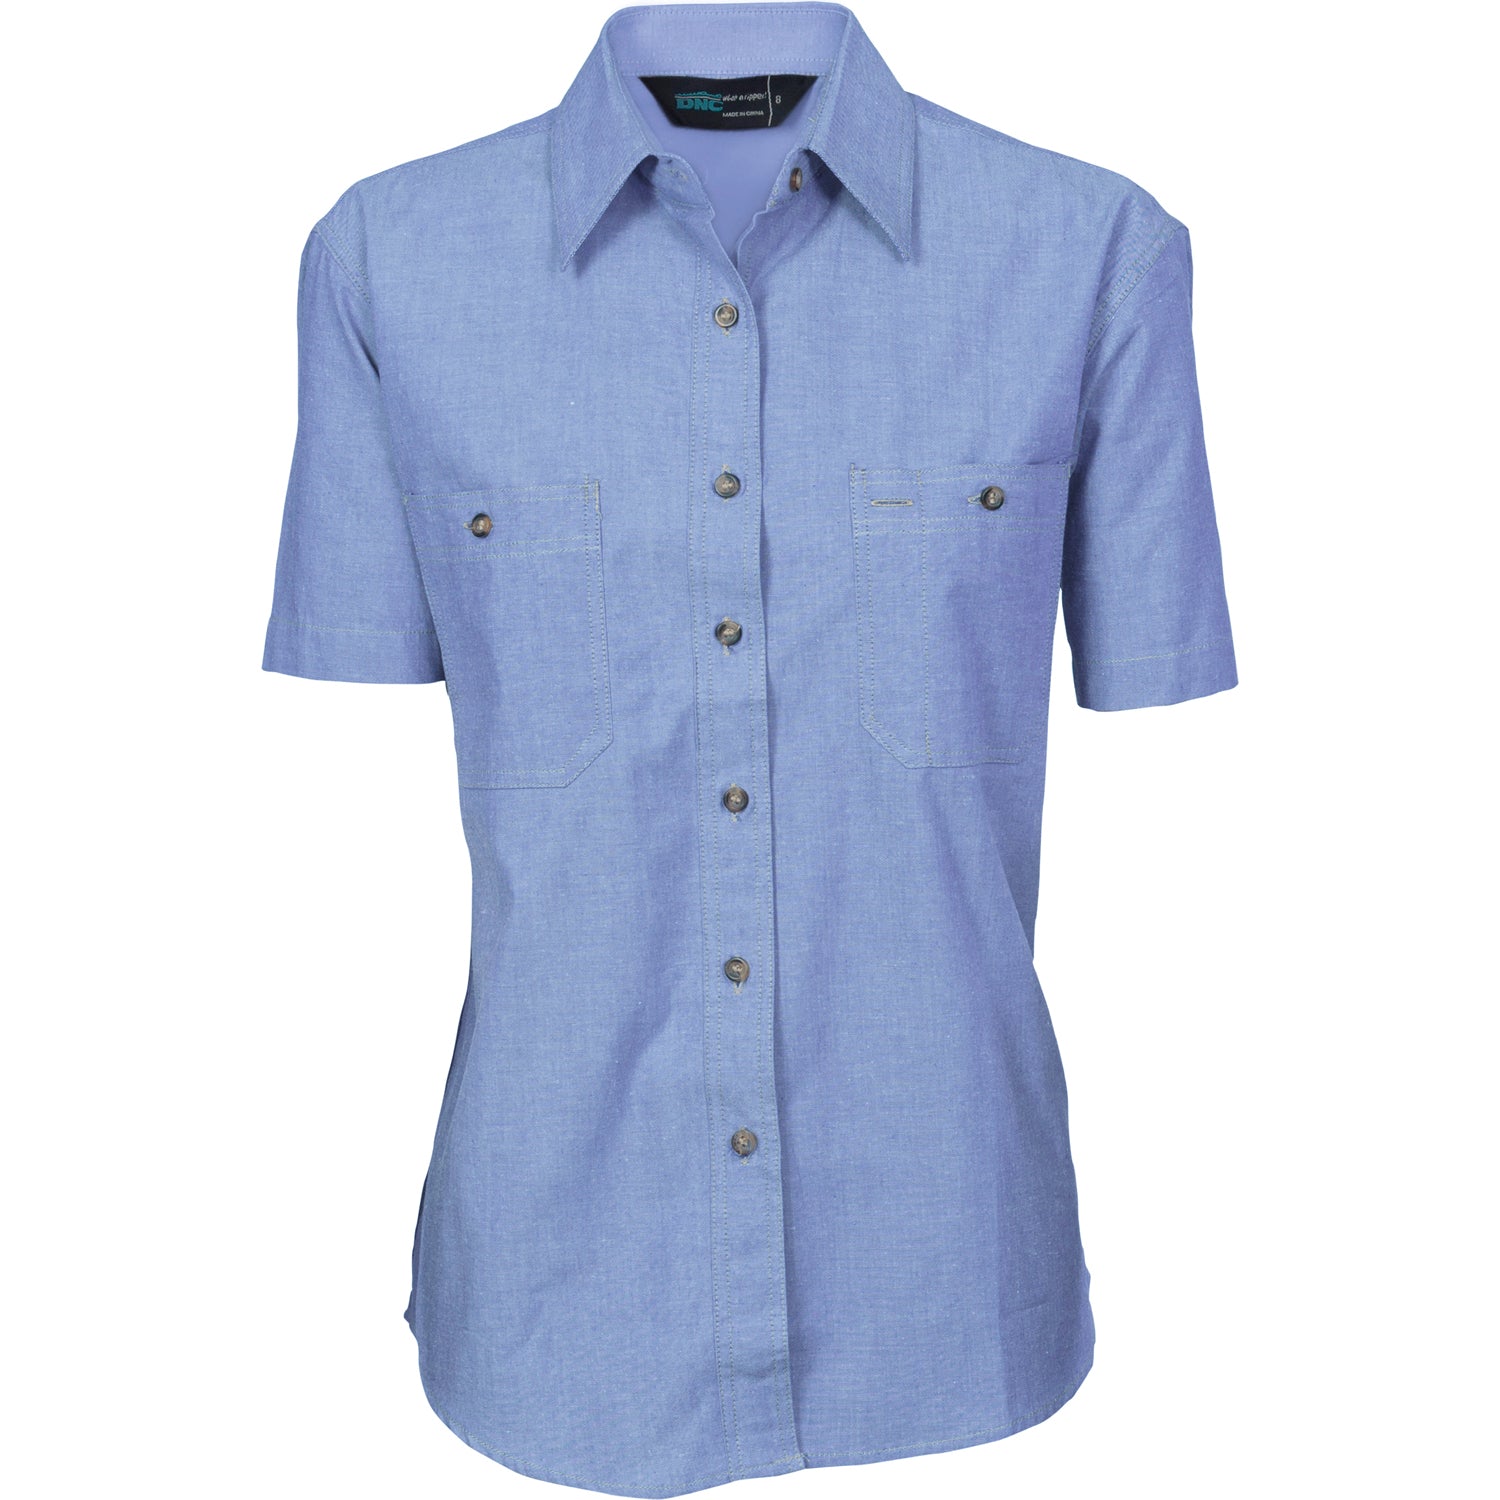 DNC Ladies Cotton Chambray Shirt - Short Sleeve -(4105)